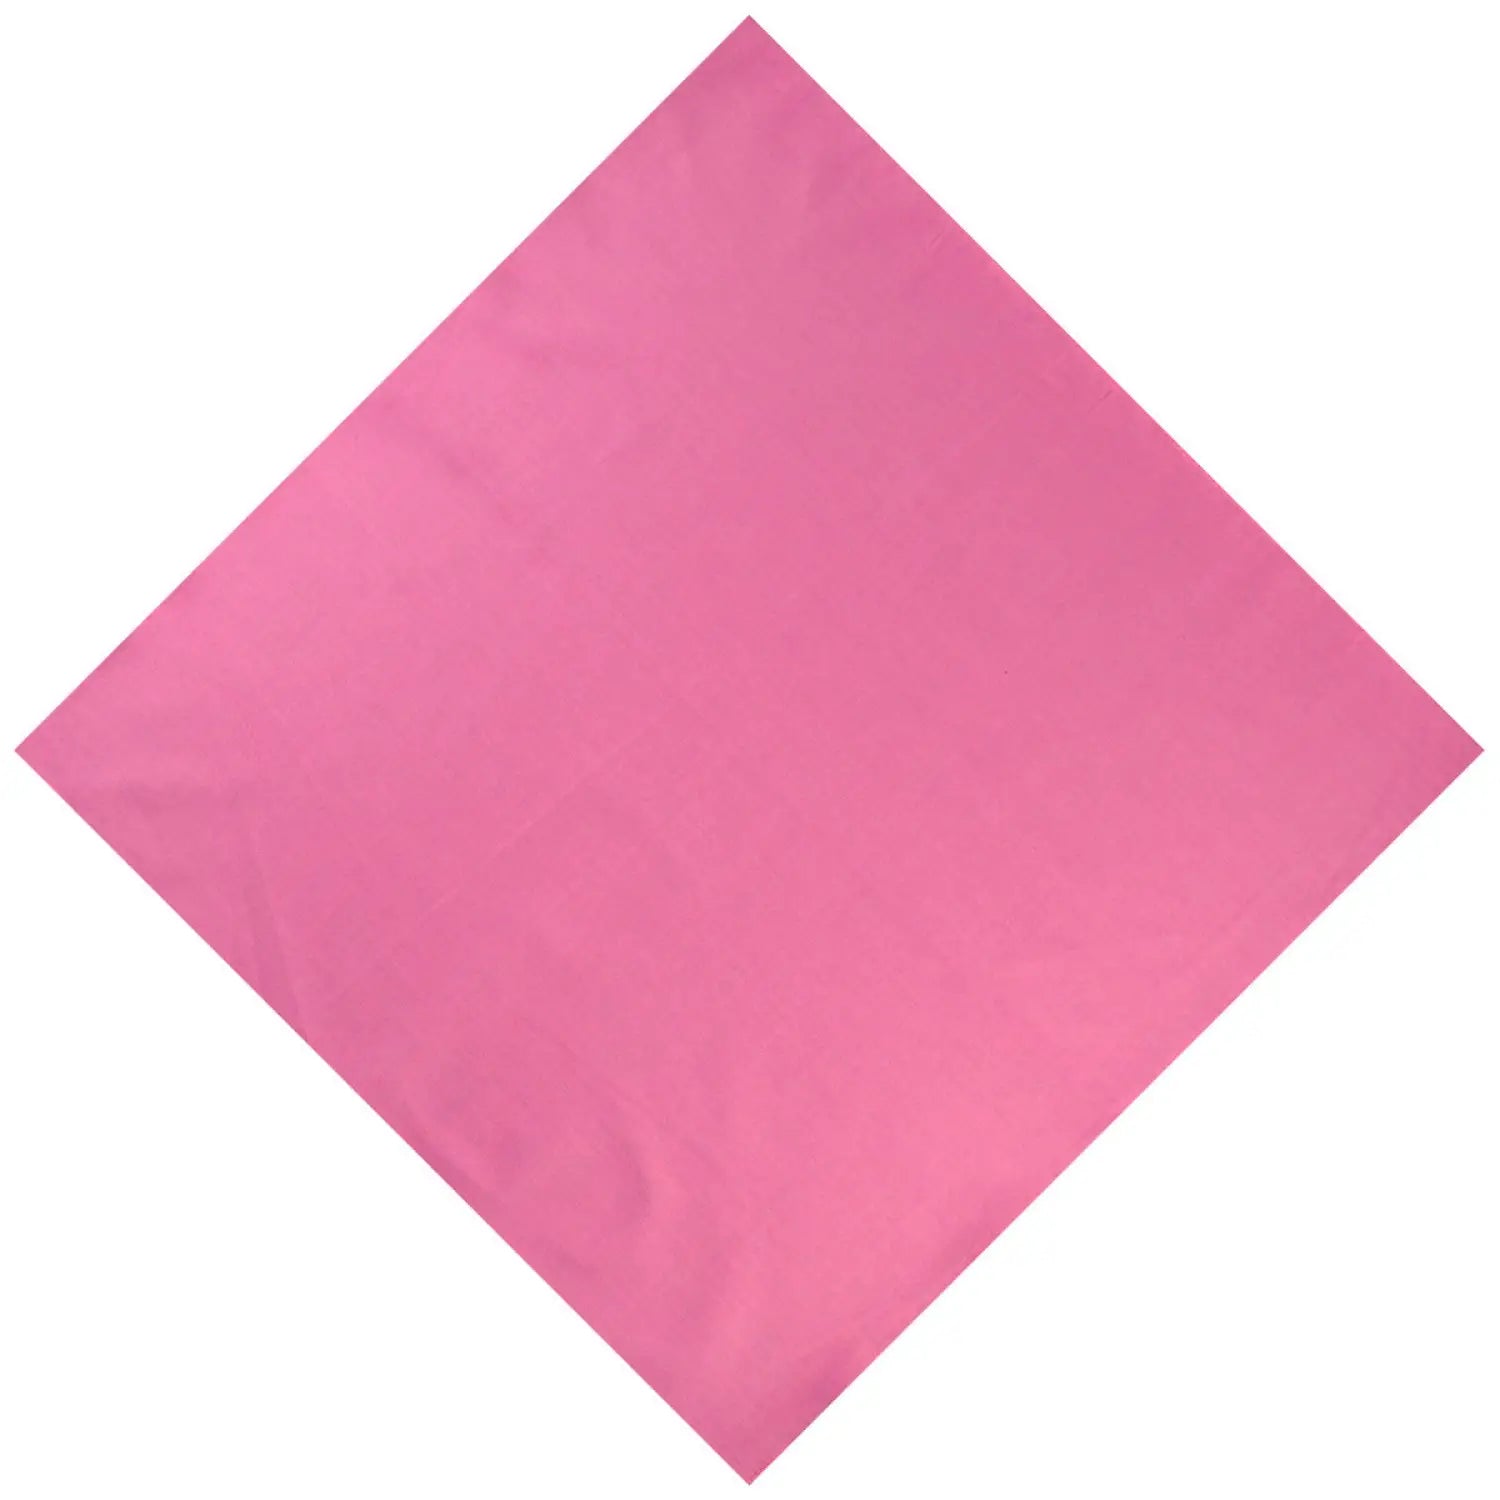 Pink cotton square bandana on white background